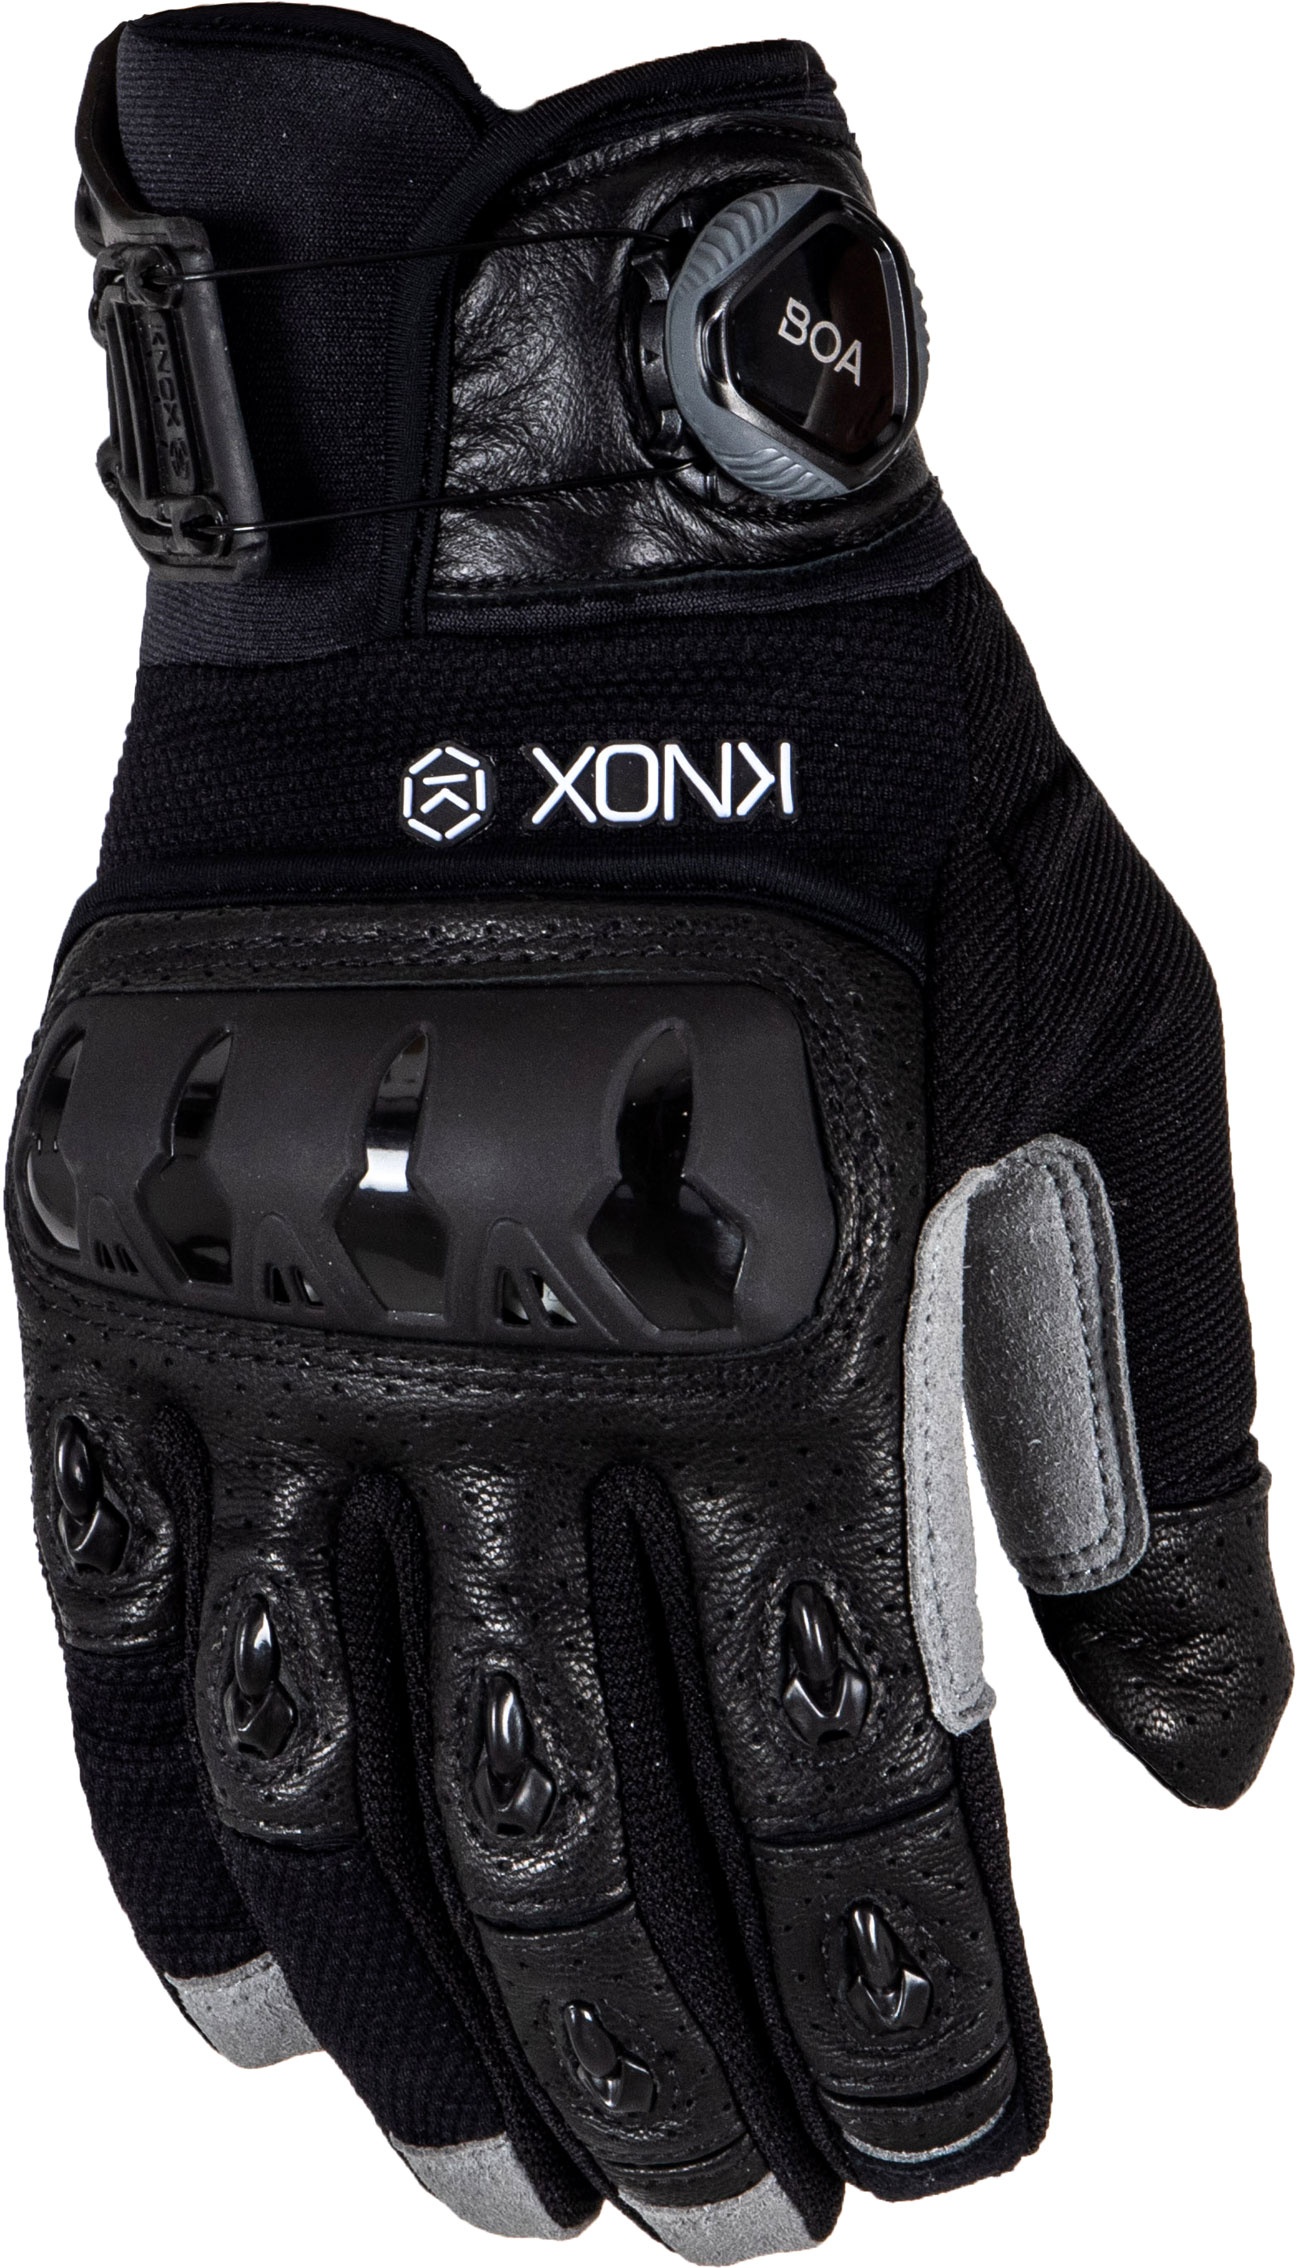 Knox Orsa Textile MK3, gants - Noir/Gris - M